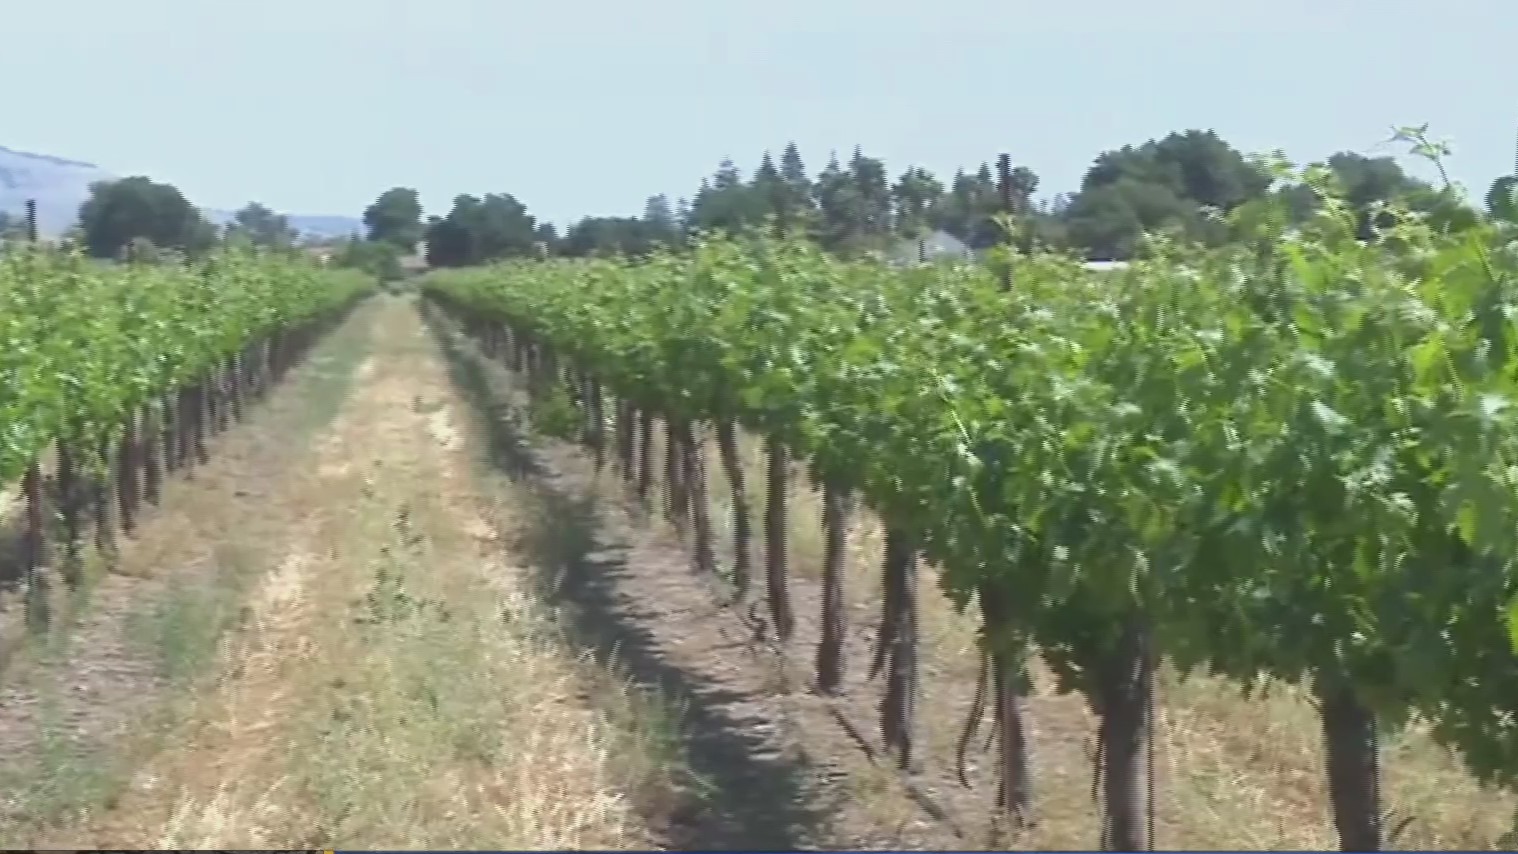 Wine grapes growing at George Guglielmo's vineyard in Morgan Hill. (CBS)